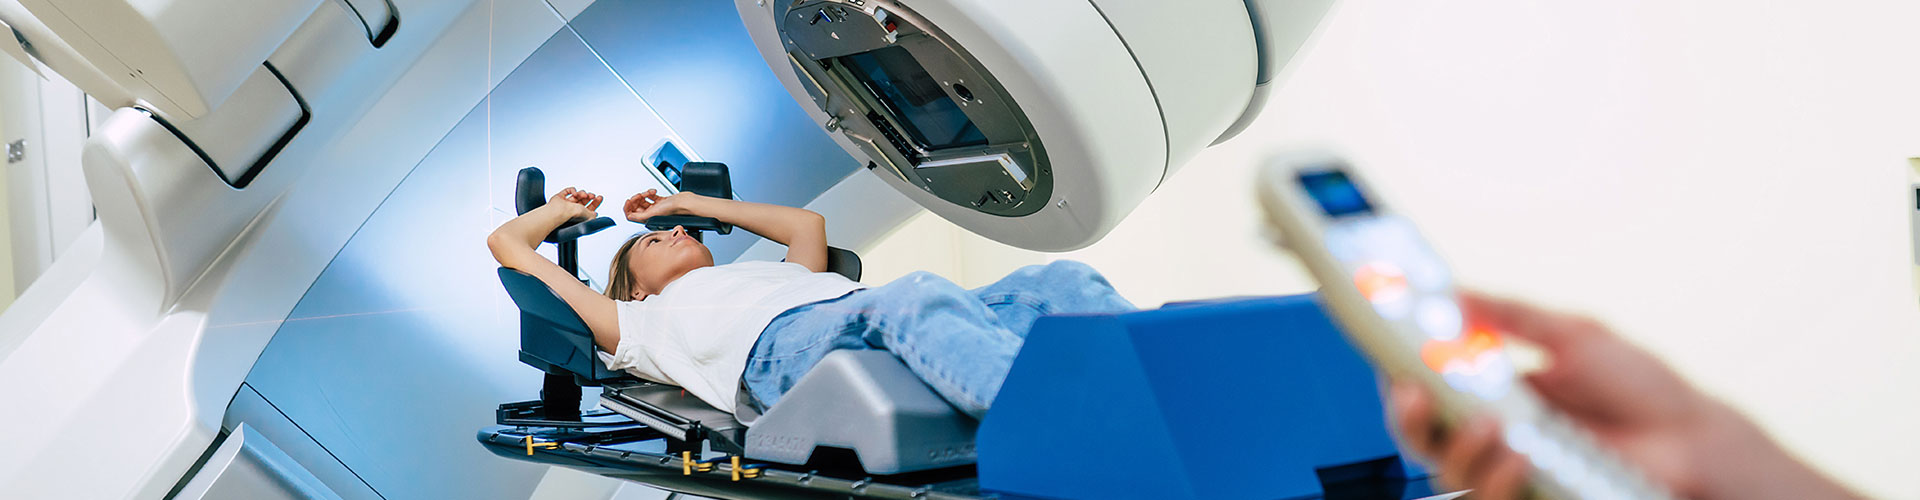 Cancer Treatment: Radiation Therapy Versus Chemotherapy - Lindenberg Cancer  & Hematology Center Marlton, NJ 08053